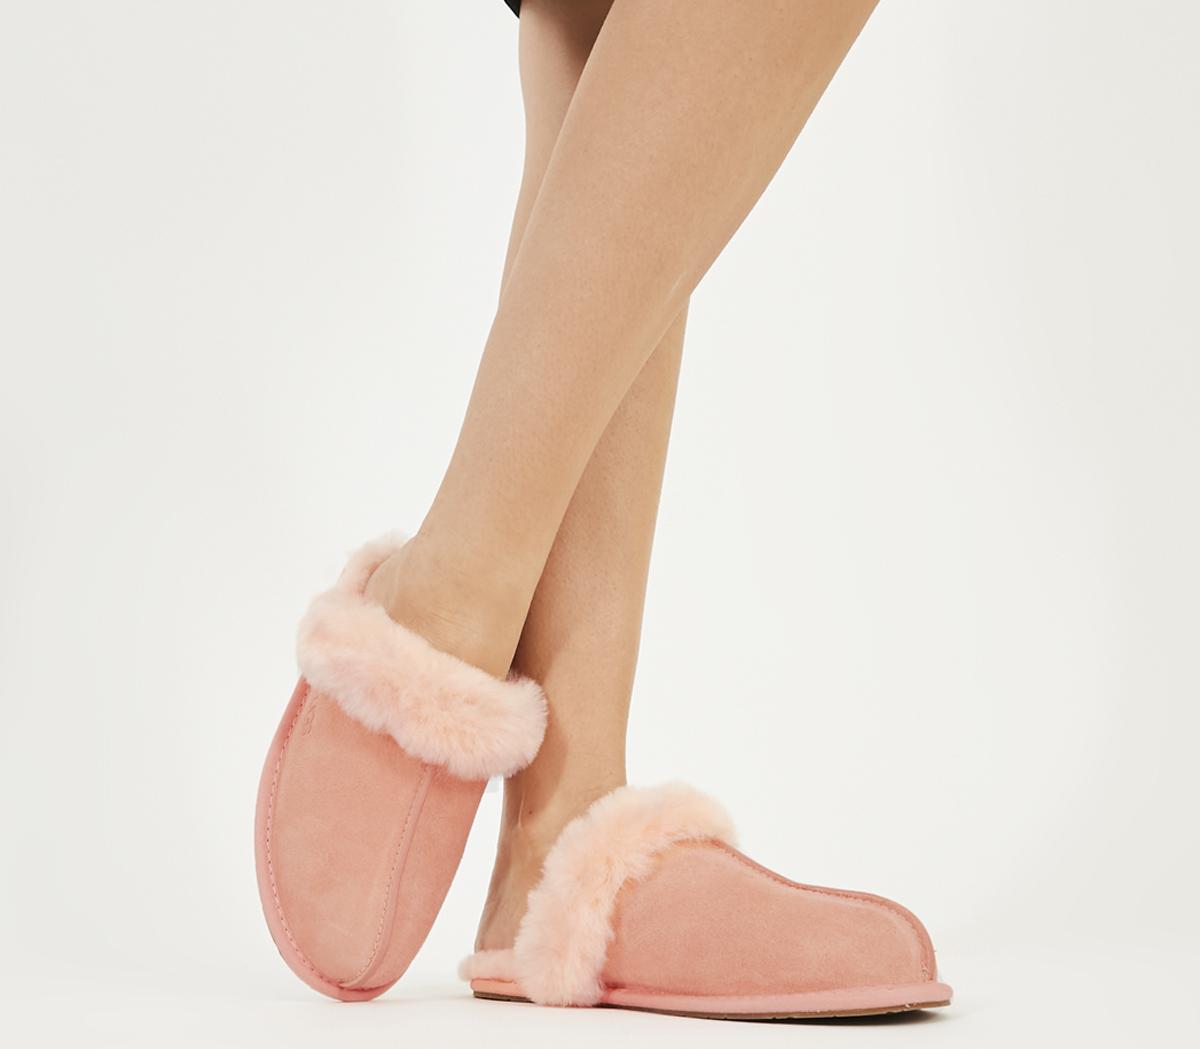 ugg slippers sale womens uk